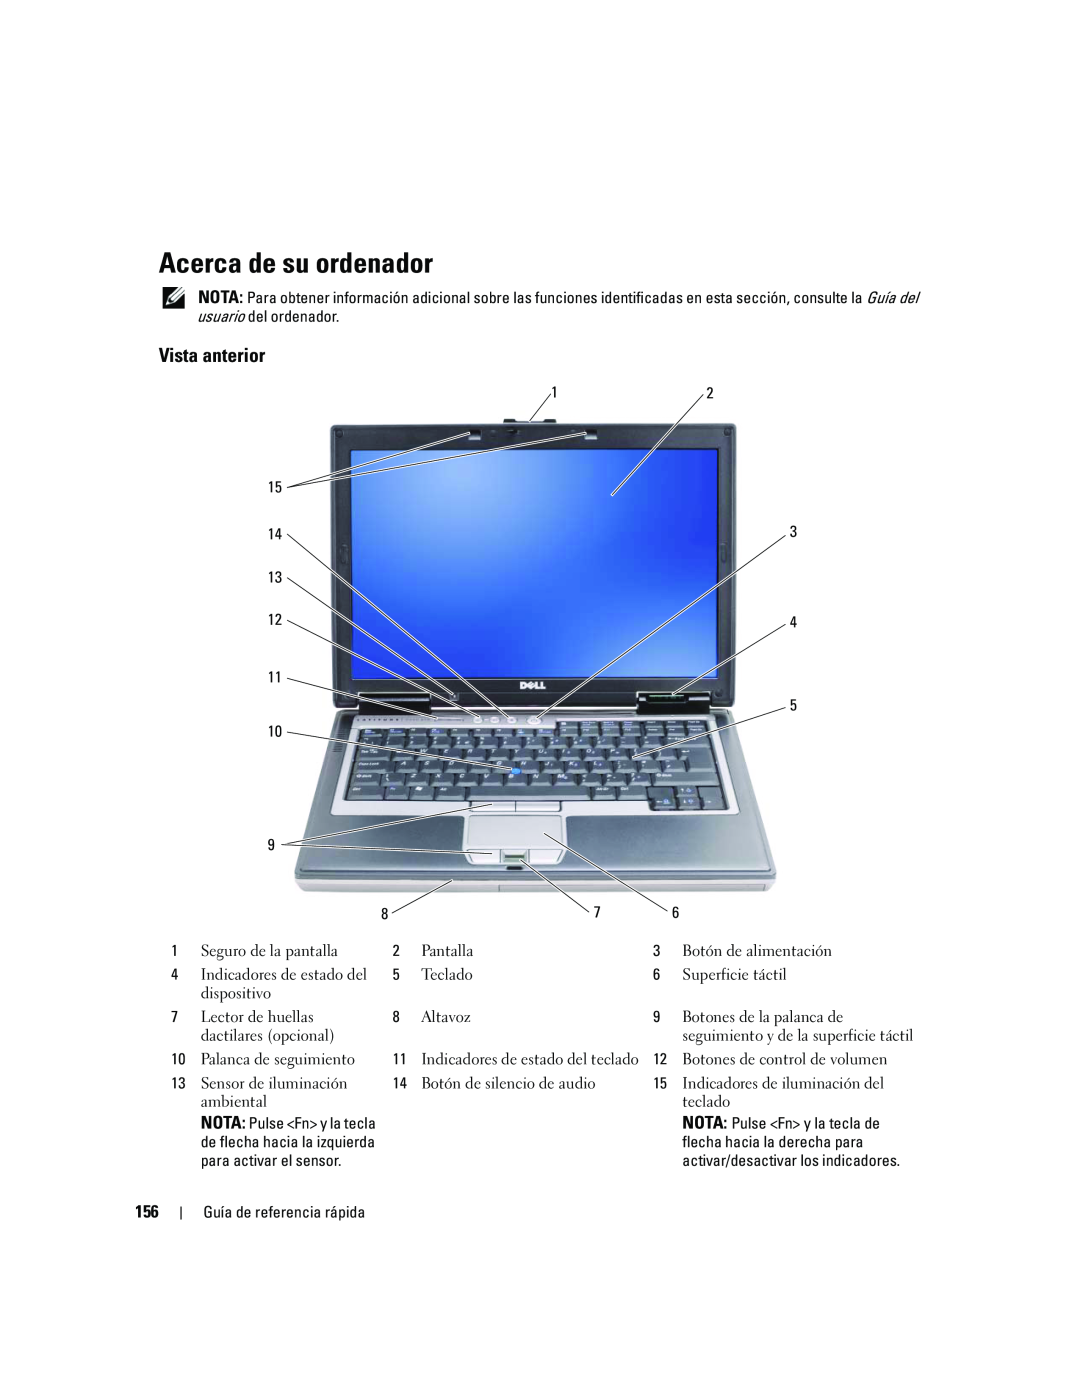 Dell ATG D620 manual Acerca de su ordenador, Vista anterior 